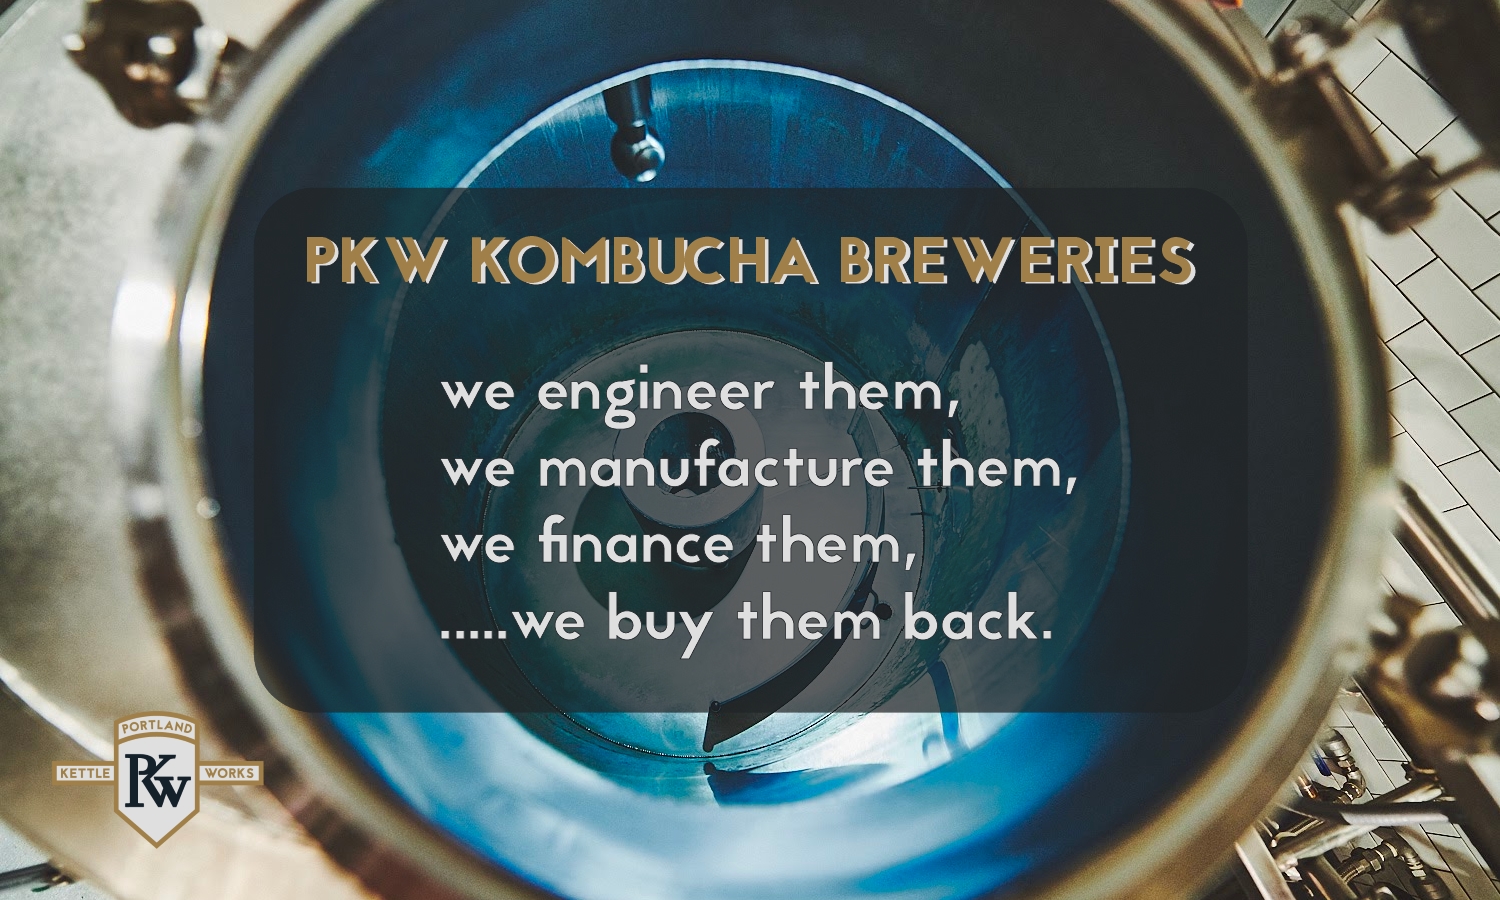 Kombucha Breweries - We Engineer, Manufacture, Finance, & Buy Back